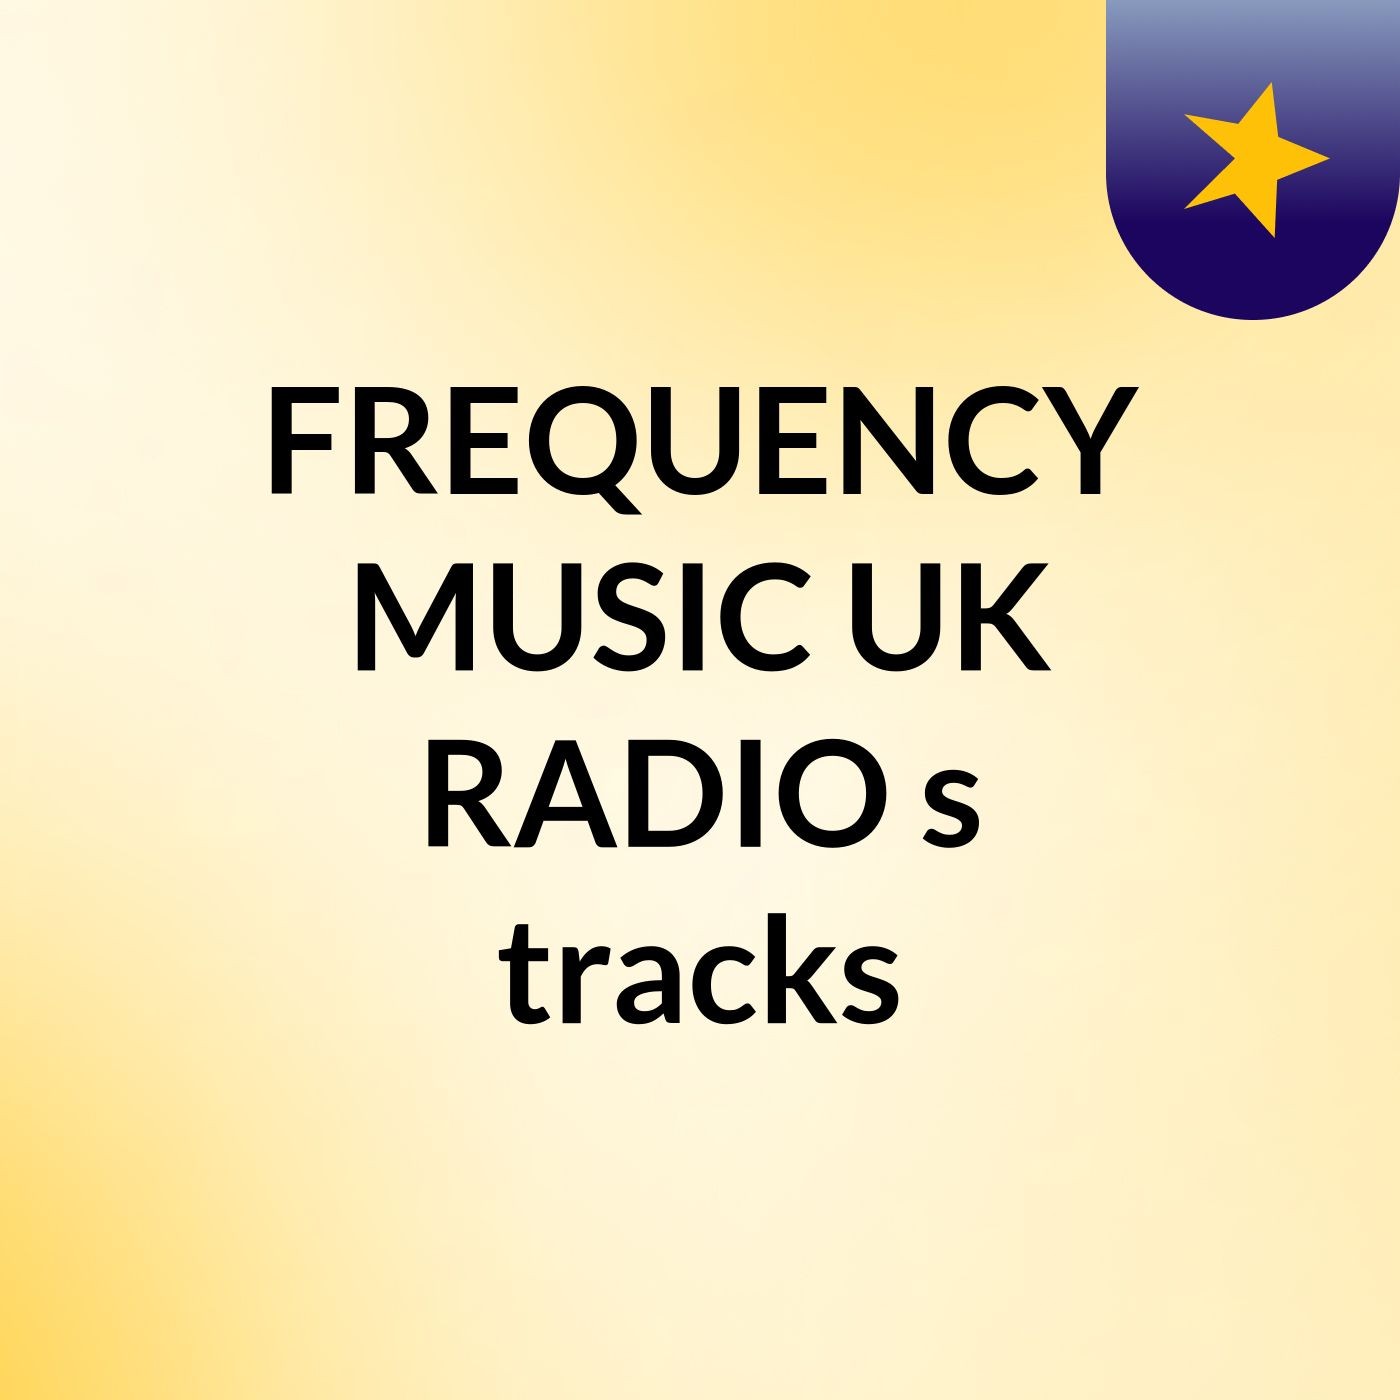 FREQUENCY MUSIC UK RADIO's tracks